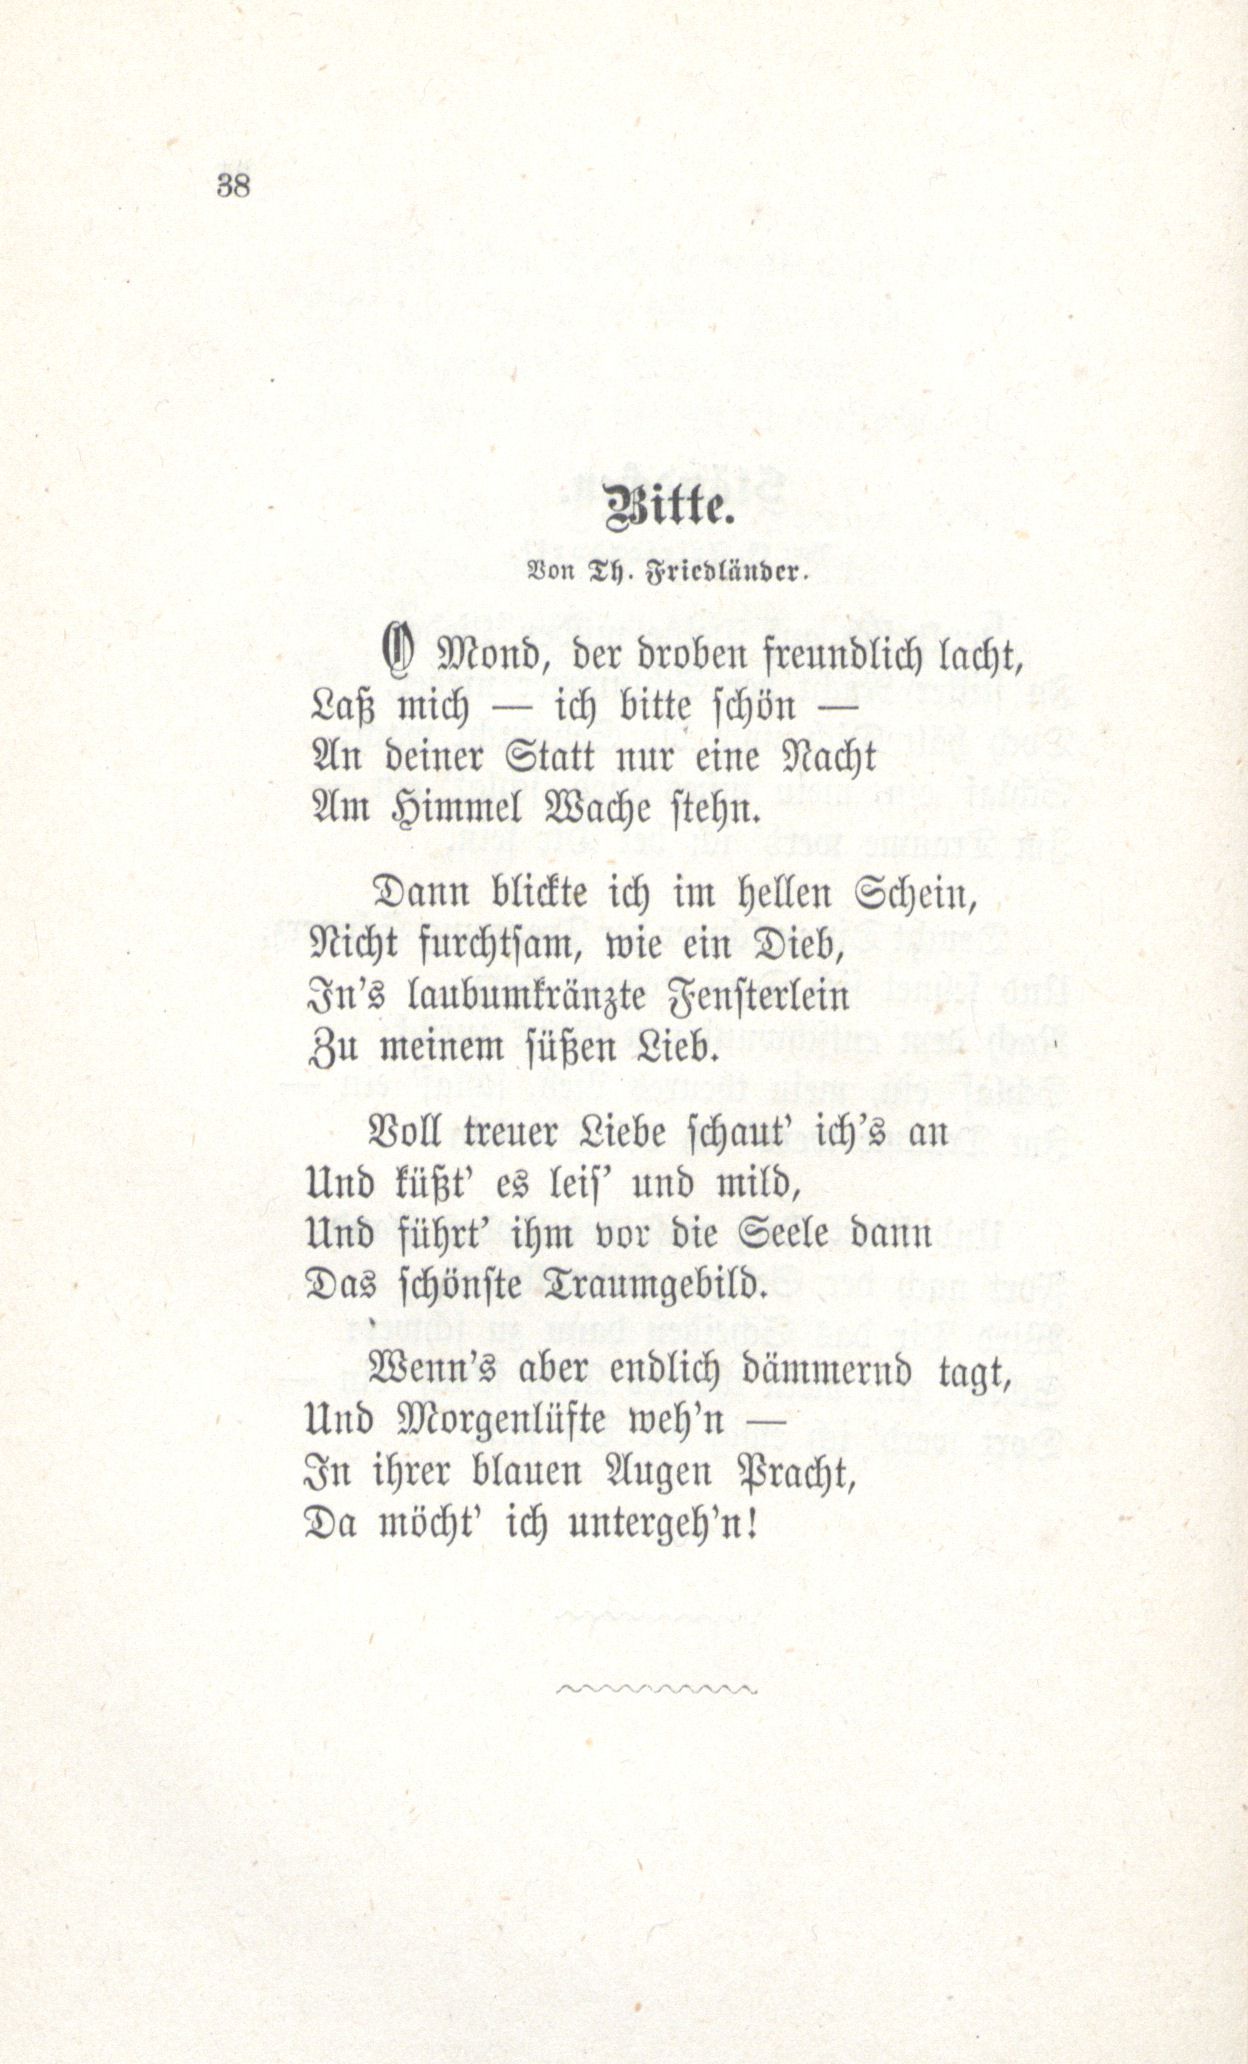 Erinnerung an die Fraternitas (1880) | 39. (38) Main body of text